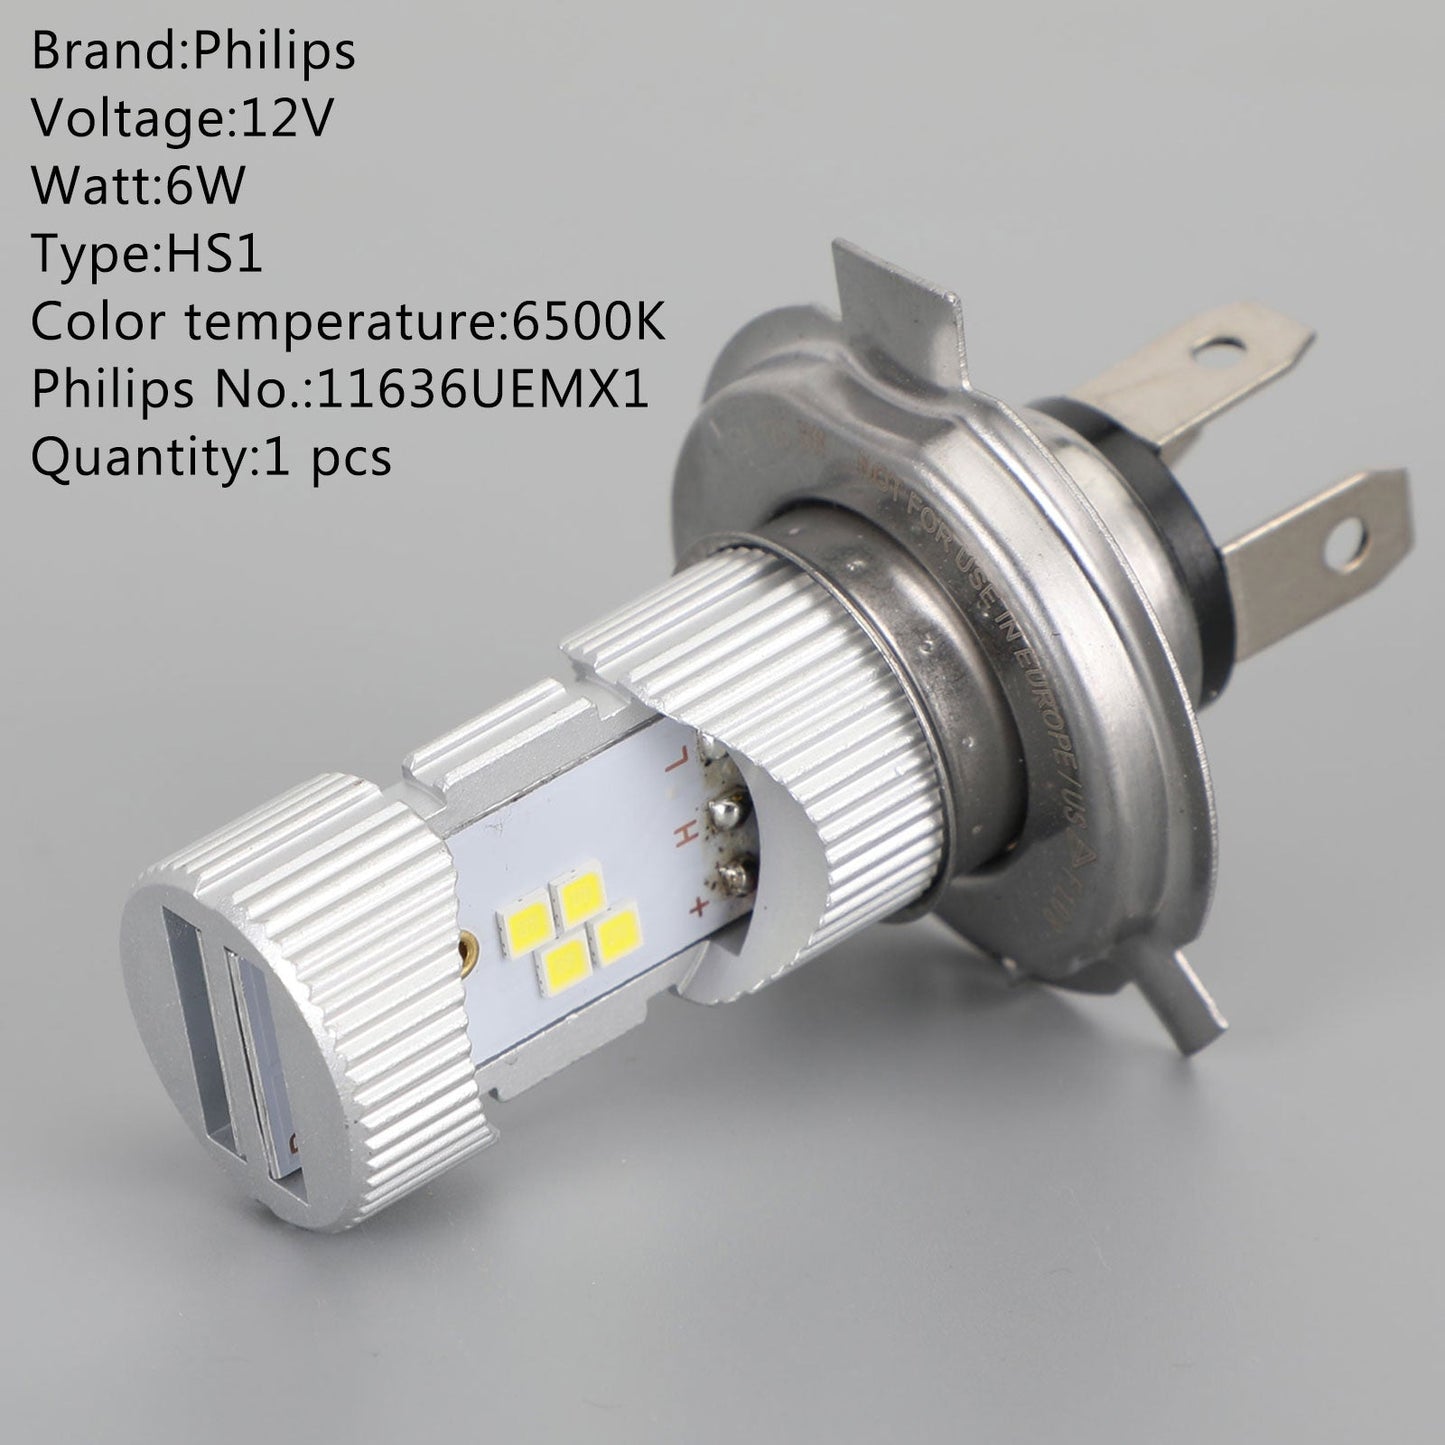 For Philips HS1 Ultinon Essential Moto +100% Brighter 6500K White Light